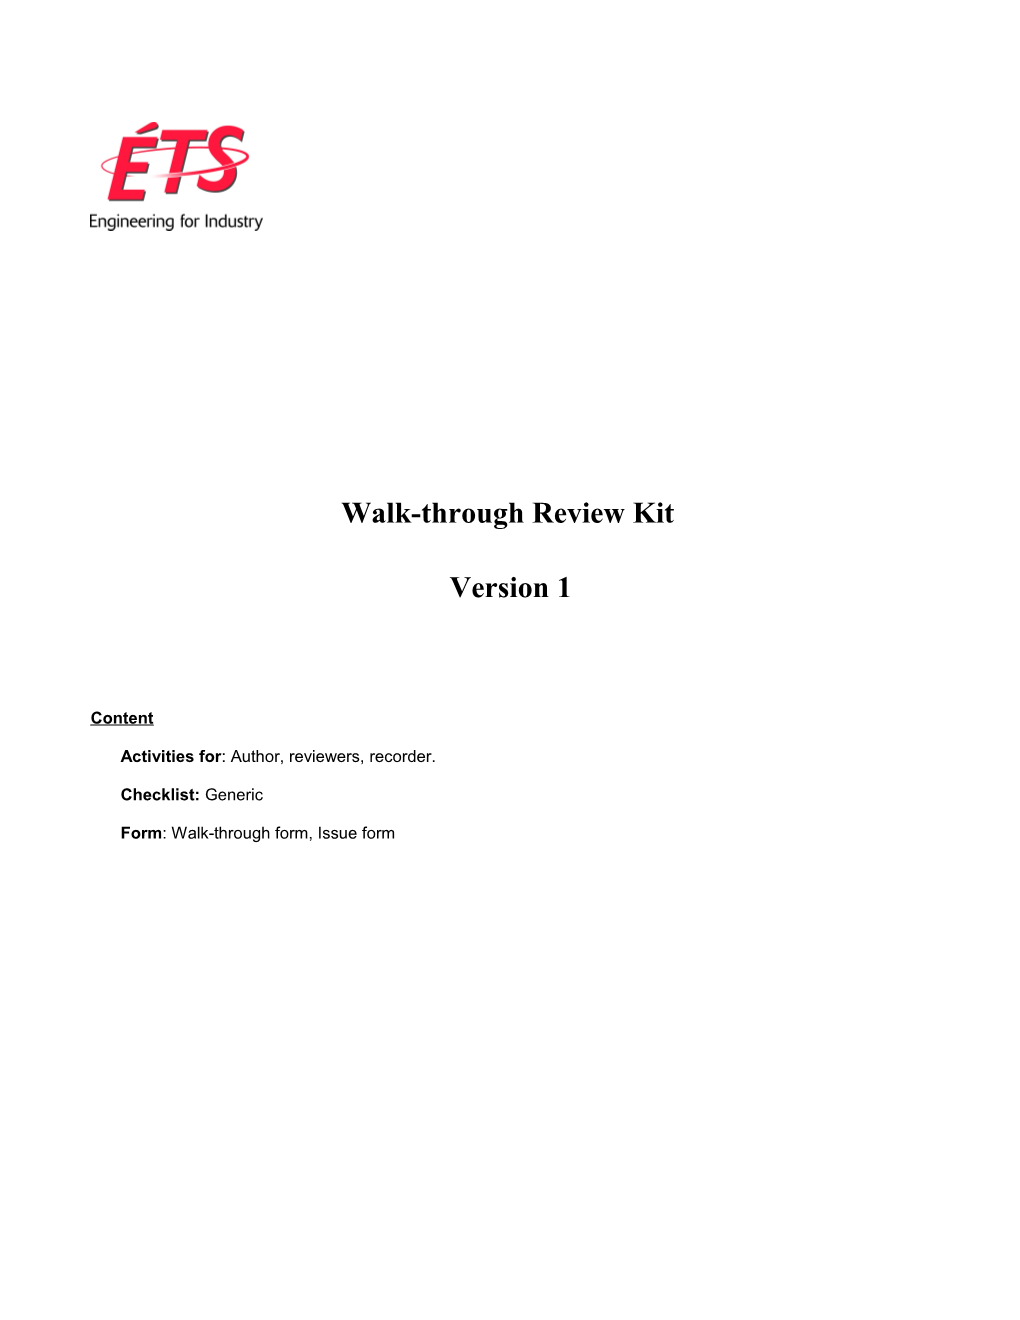 Walkthrough (WT) Process